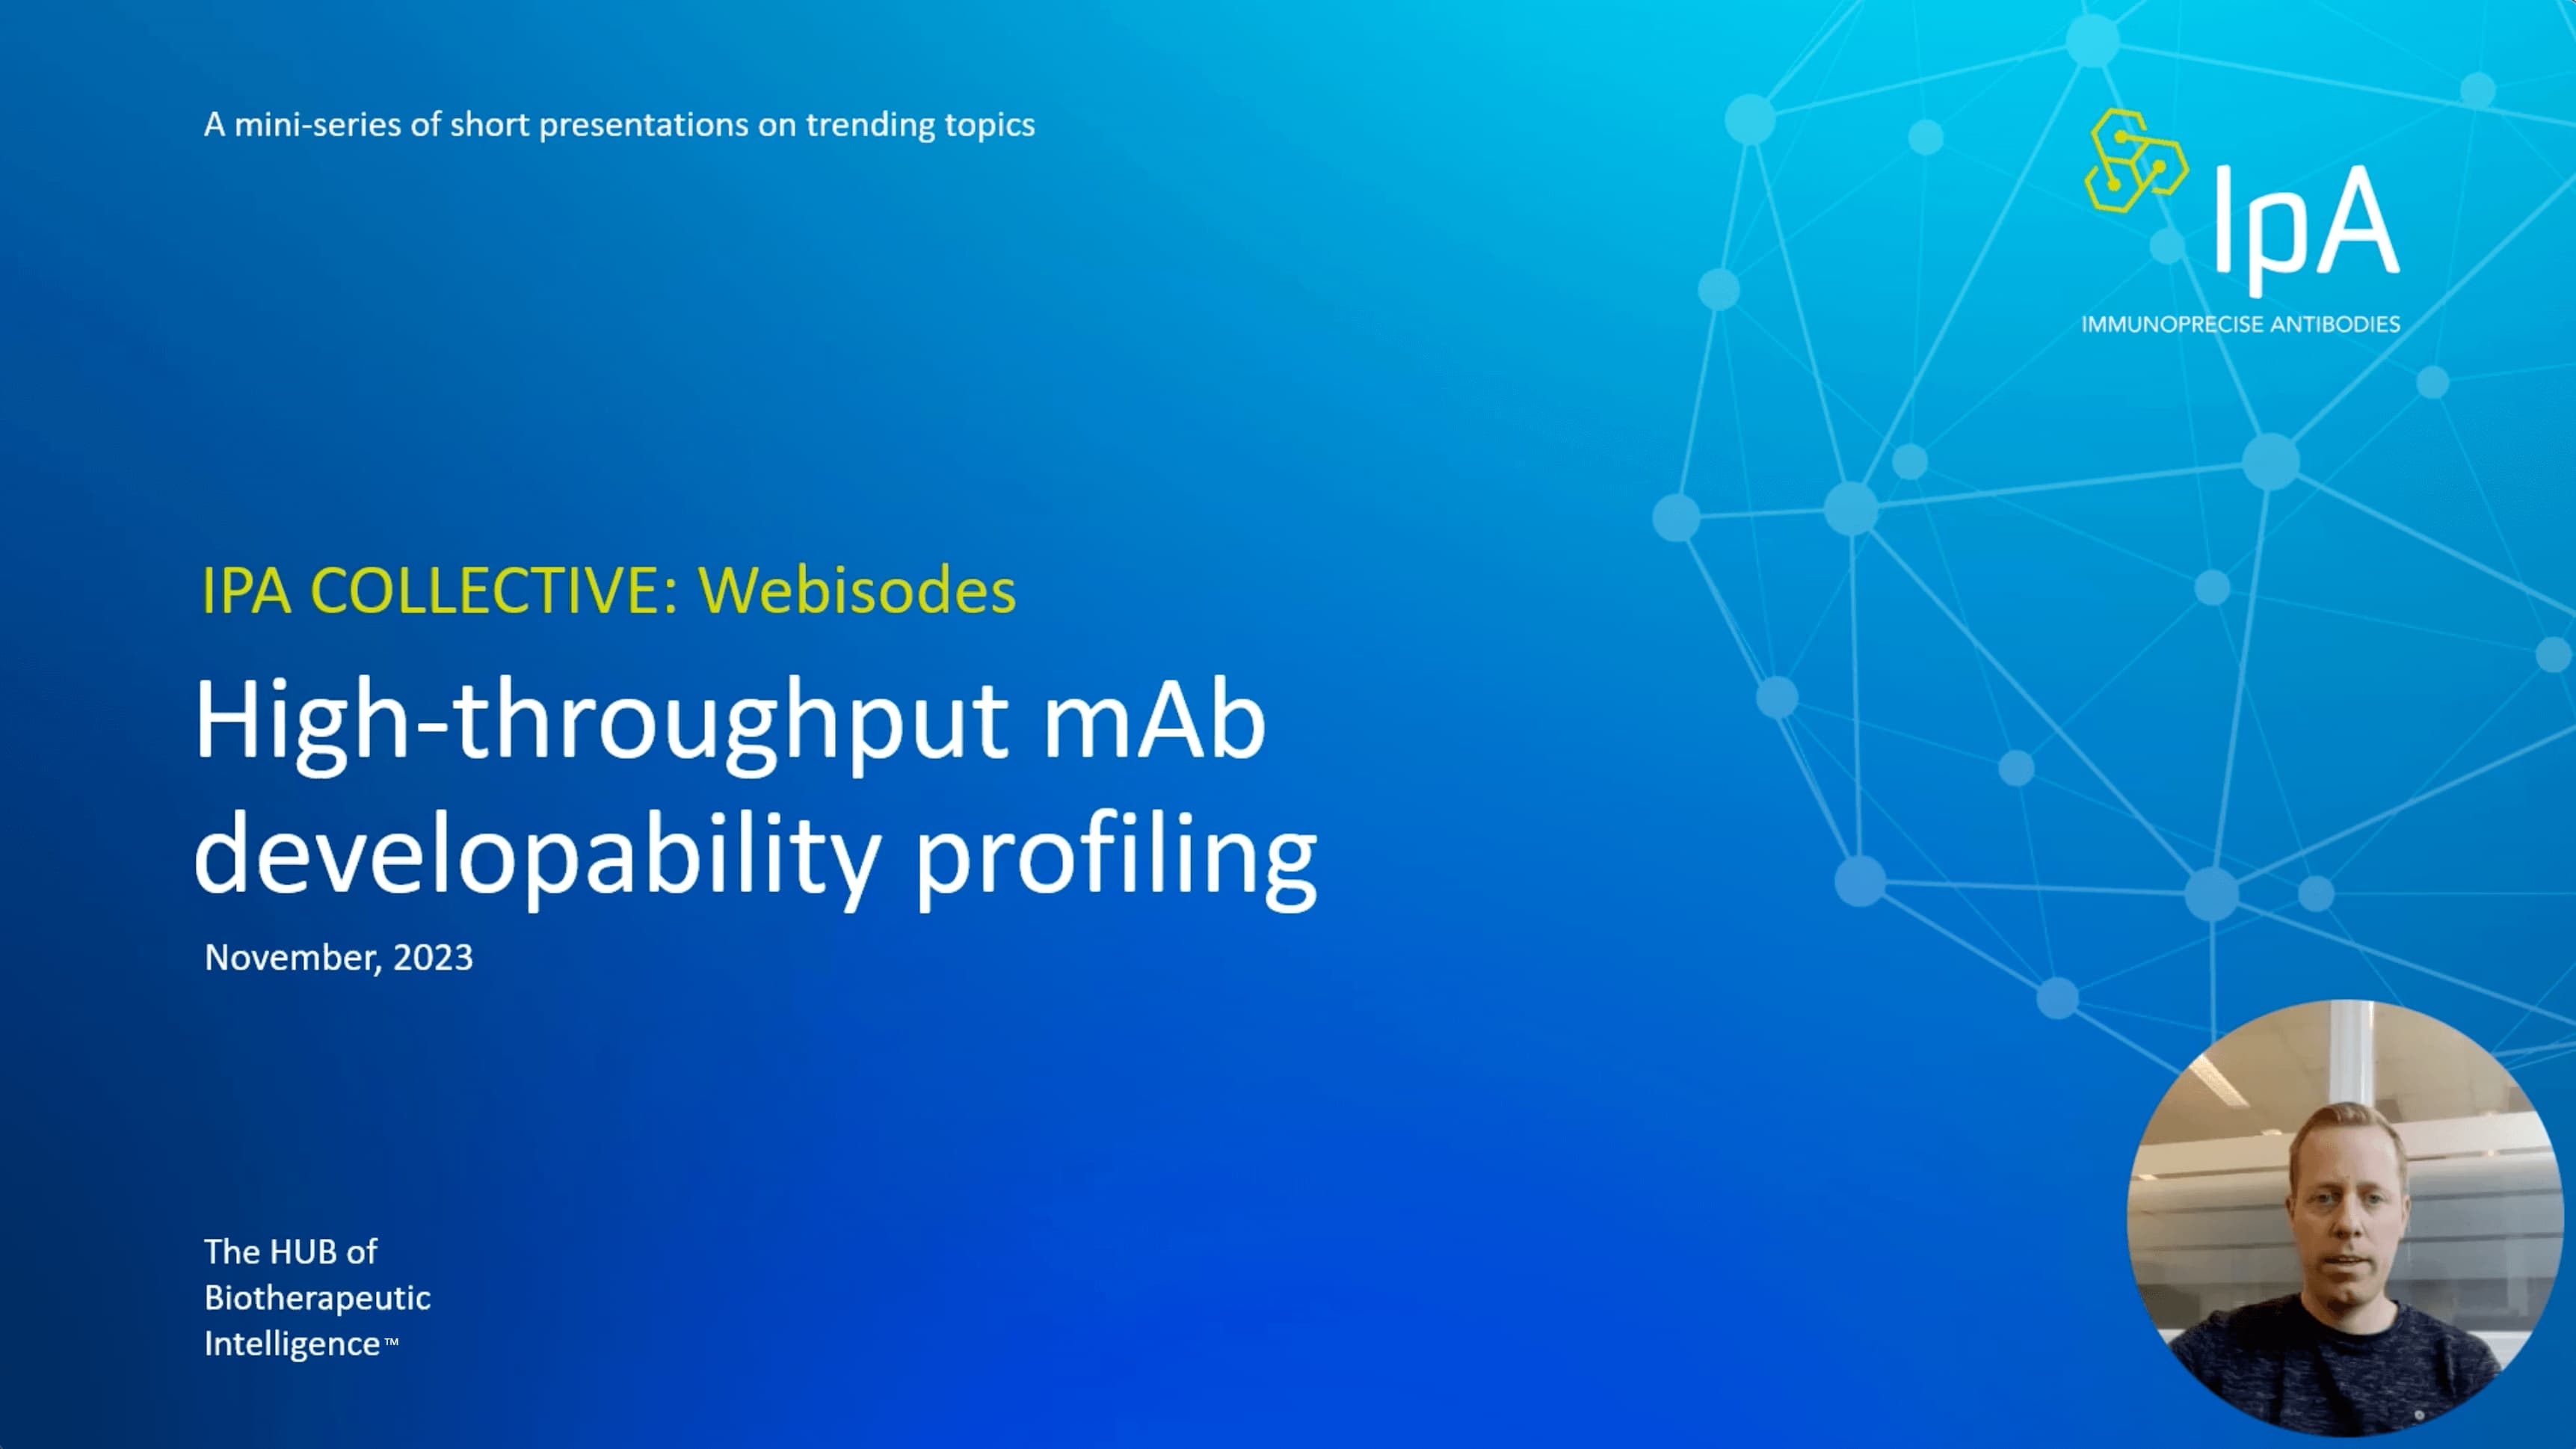 High-throughput mAb developability profiling